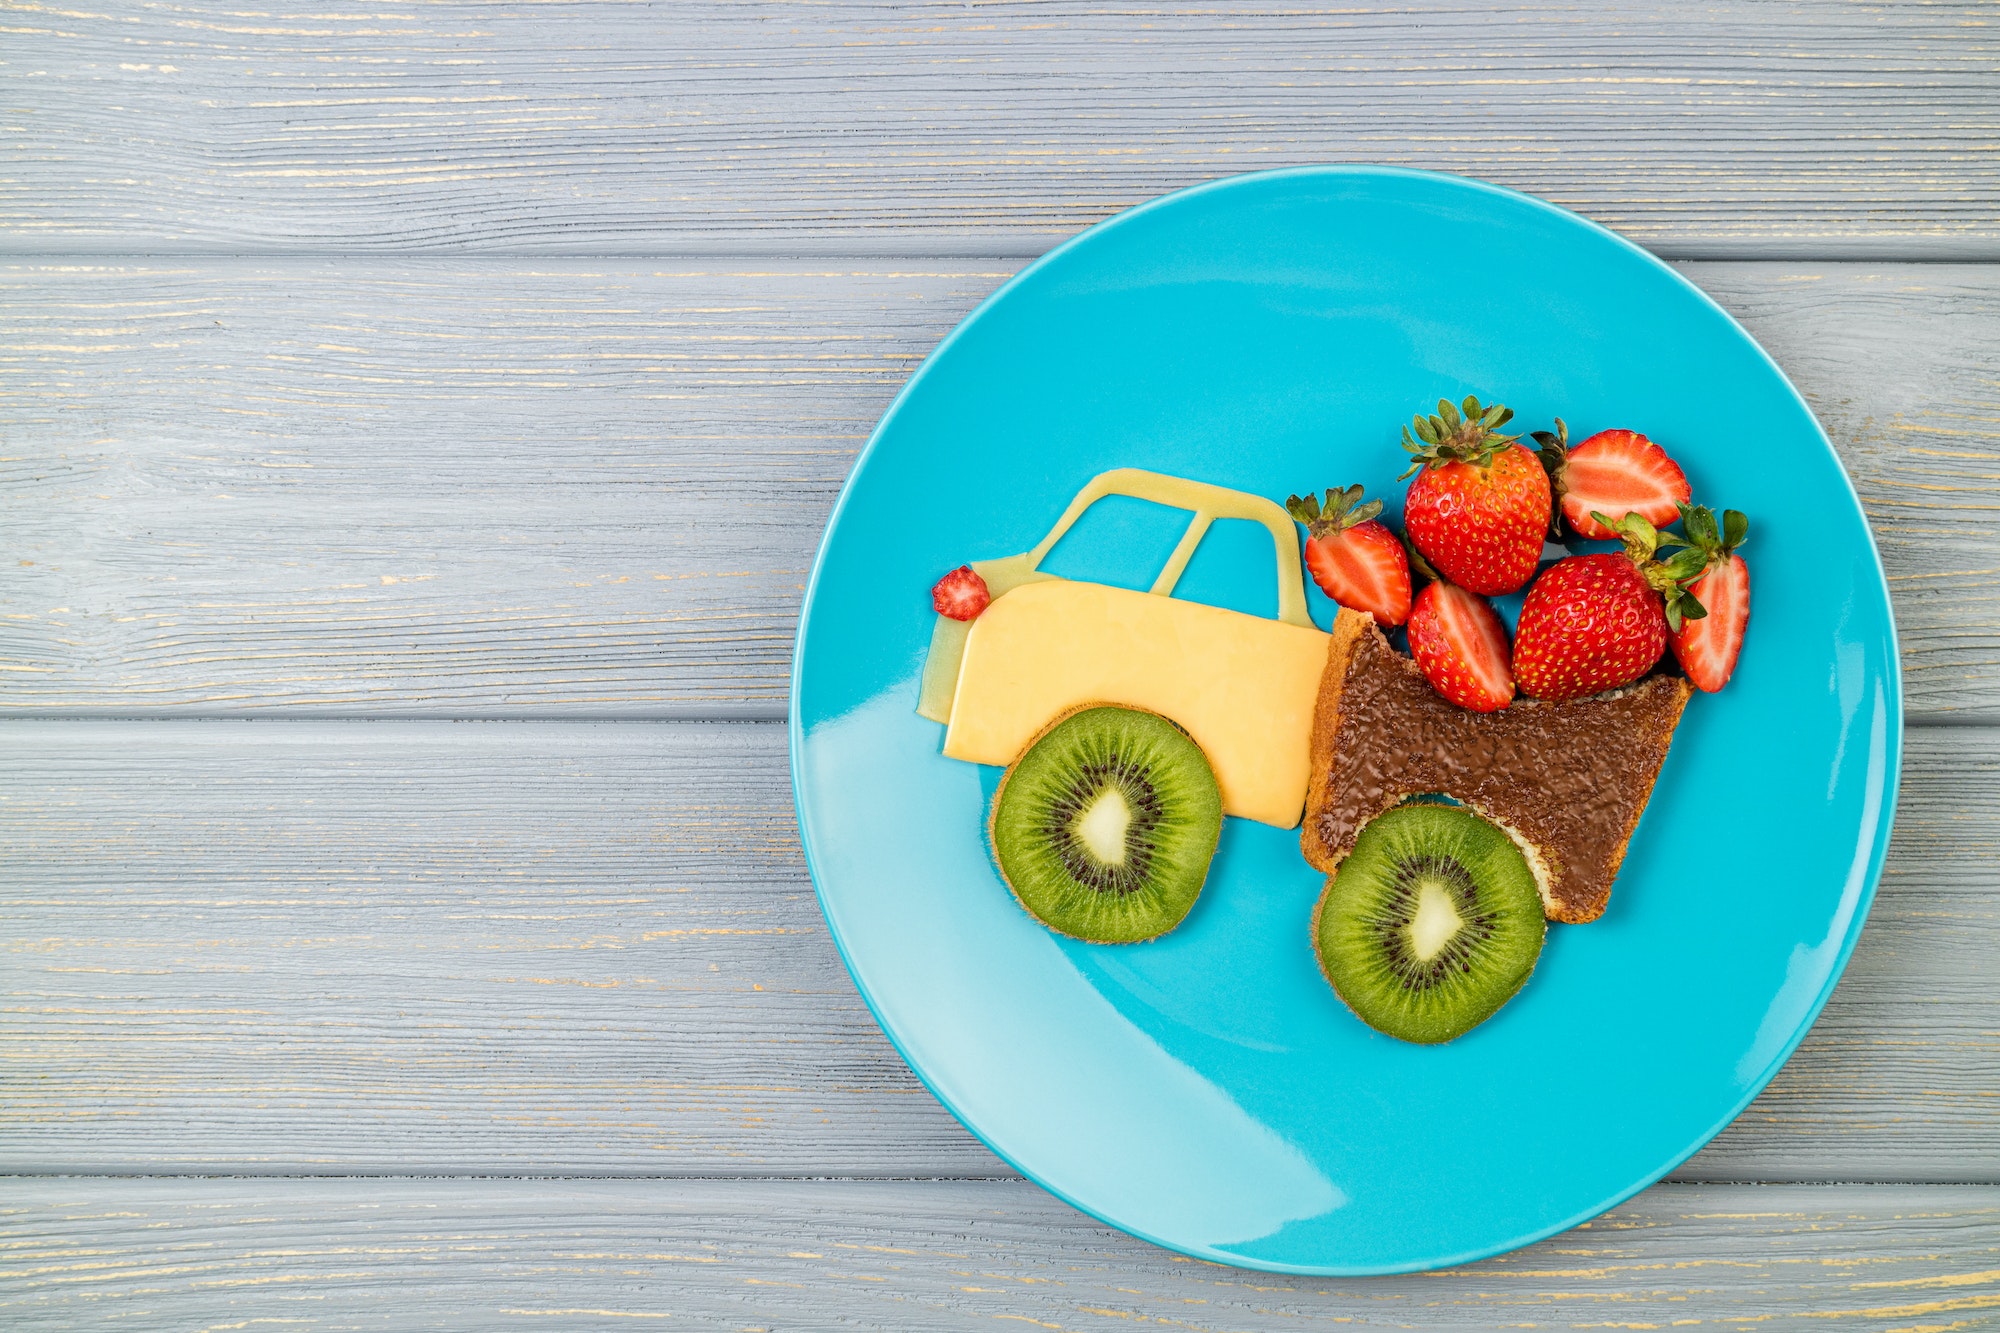 Funny kids food. Children's breakfast with sandwich and berries. Cute car truck sandwich